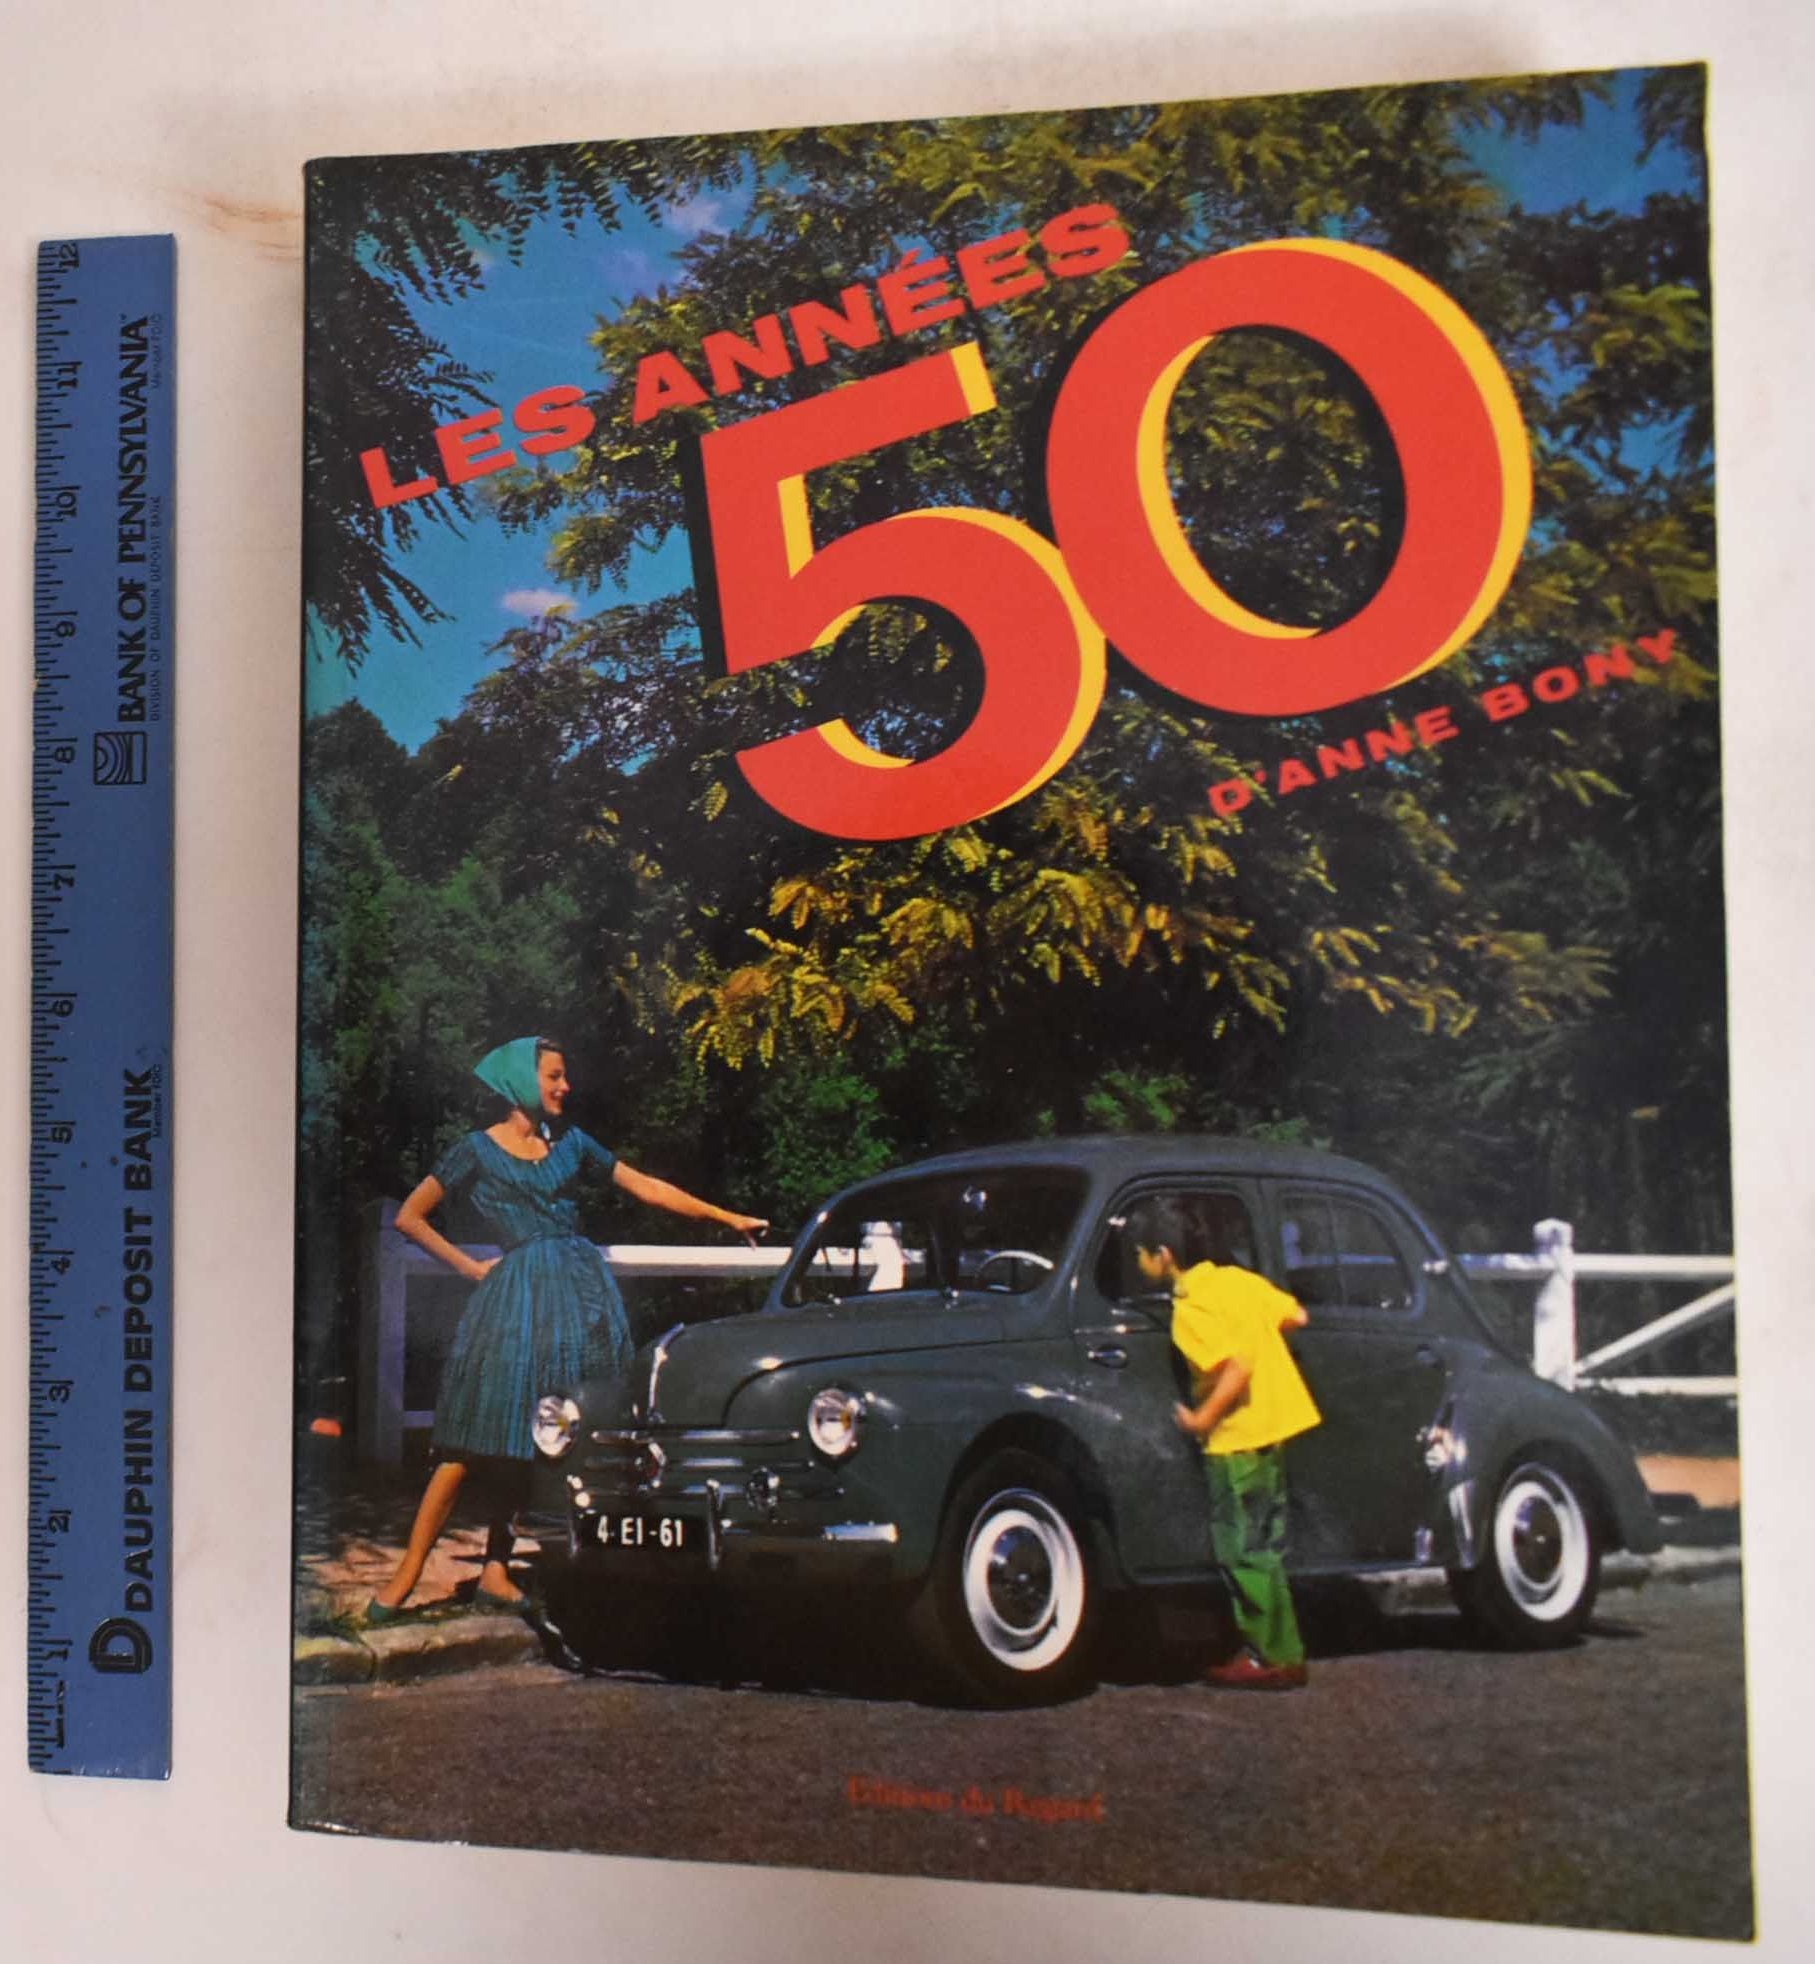 Les Annees 50 d'Anne Bony by Anne Bony on Mullen Books